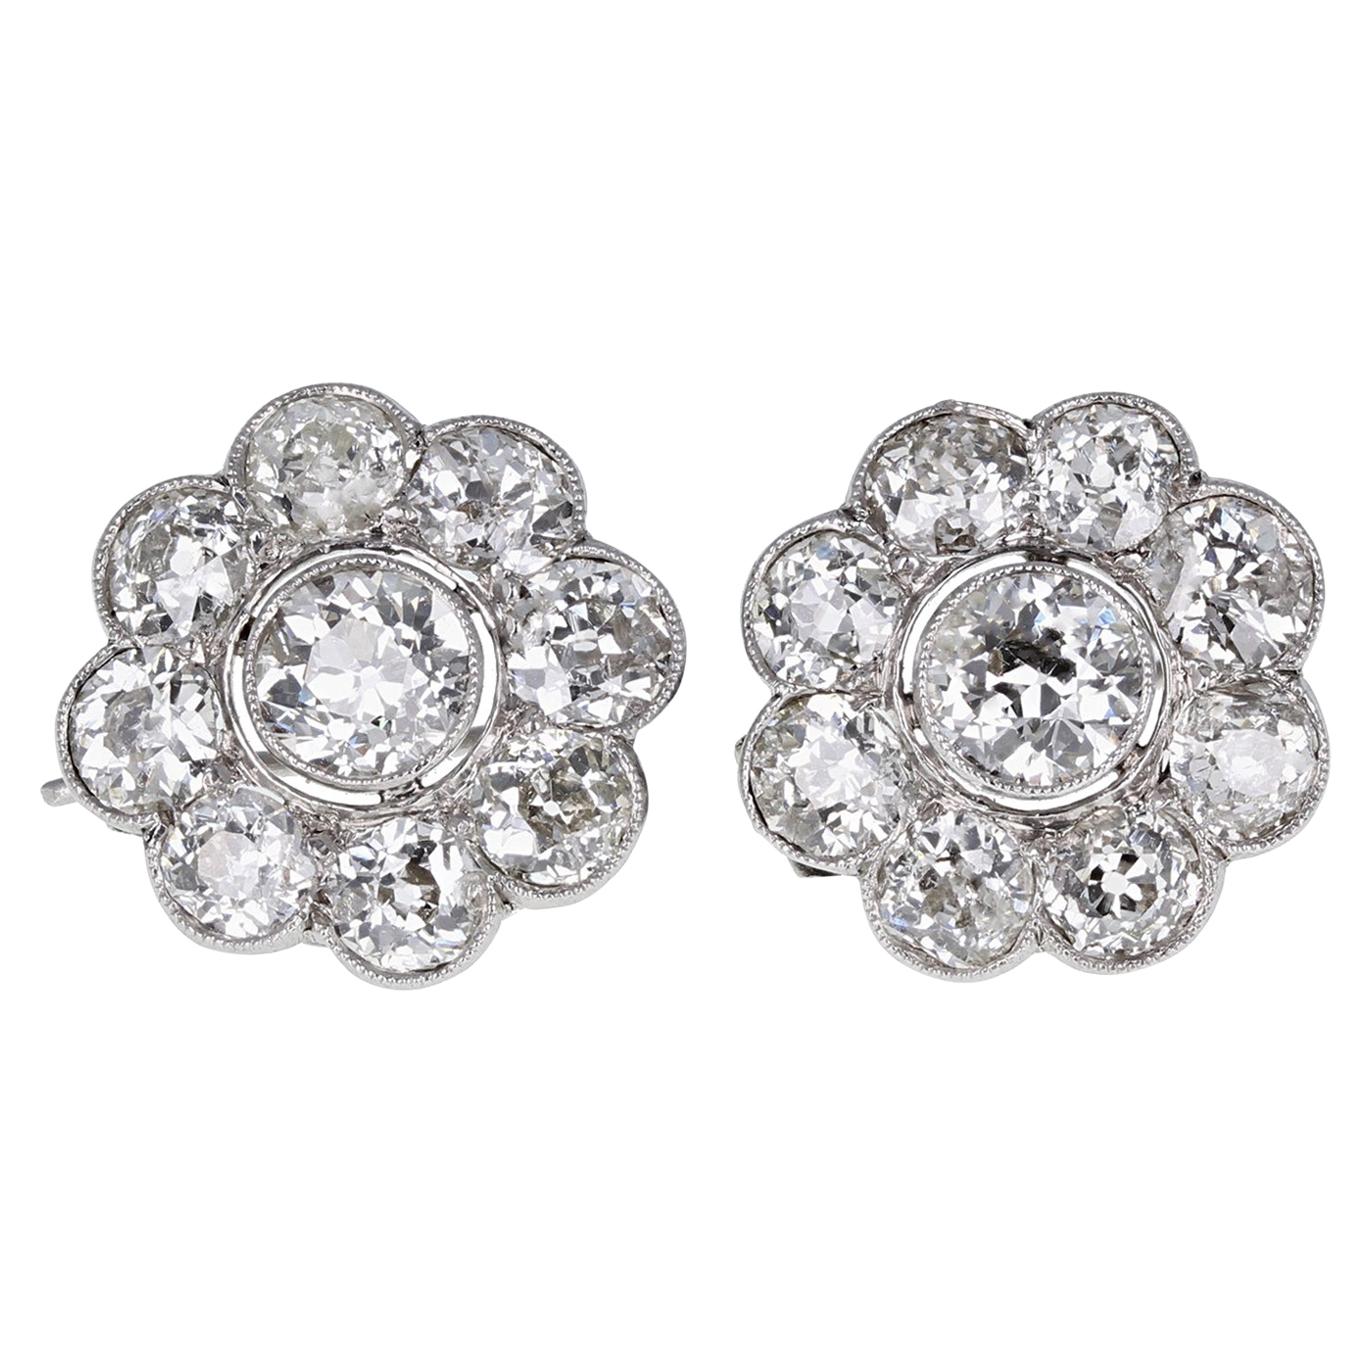 Antique Edwardian Platinum Diamond Daisy Cluster Earrings